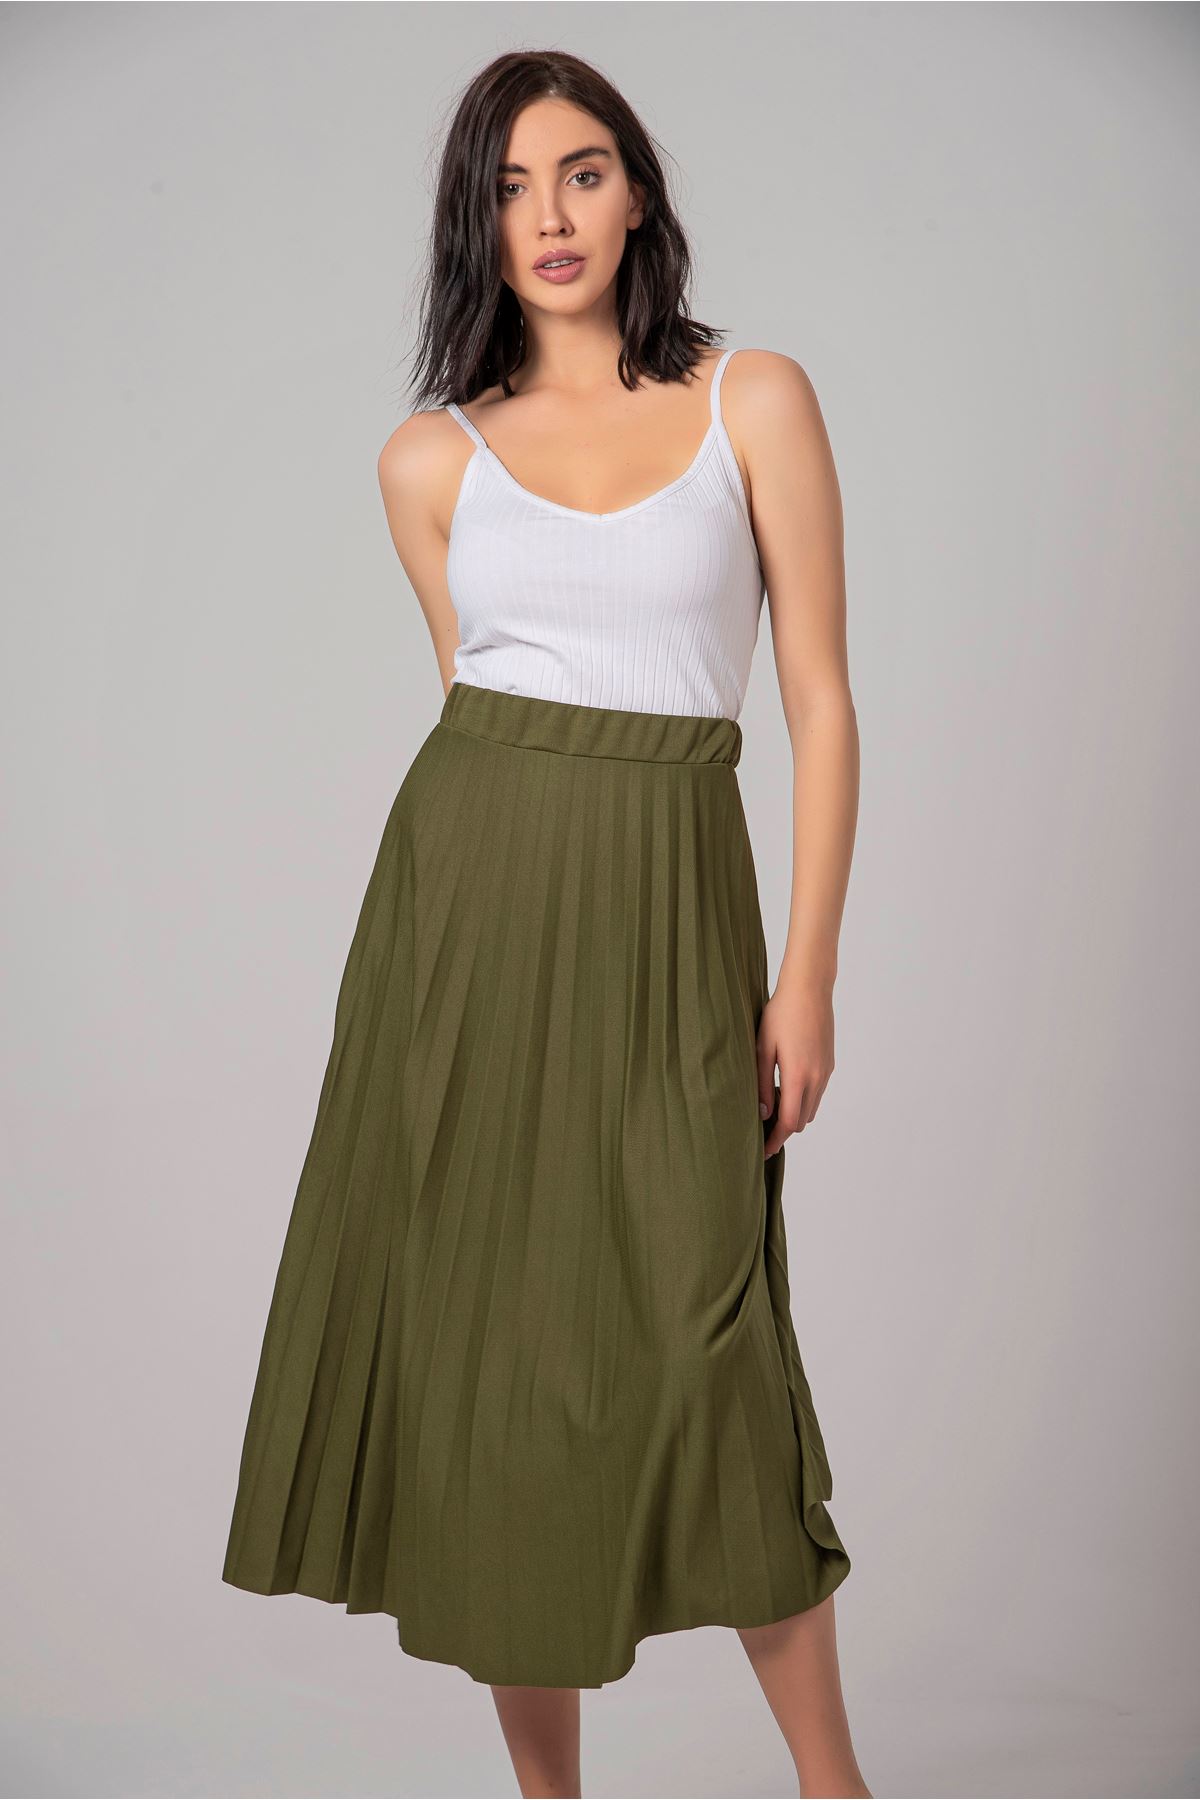 Lycra Knit FabricMidi Comfy Fit Pleated Women'S Skirt - Khaki 